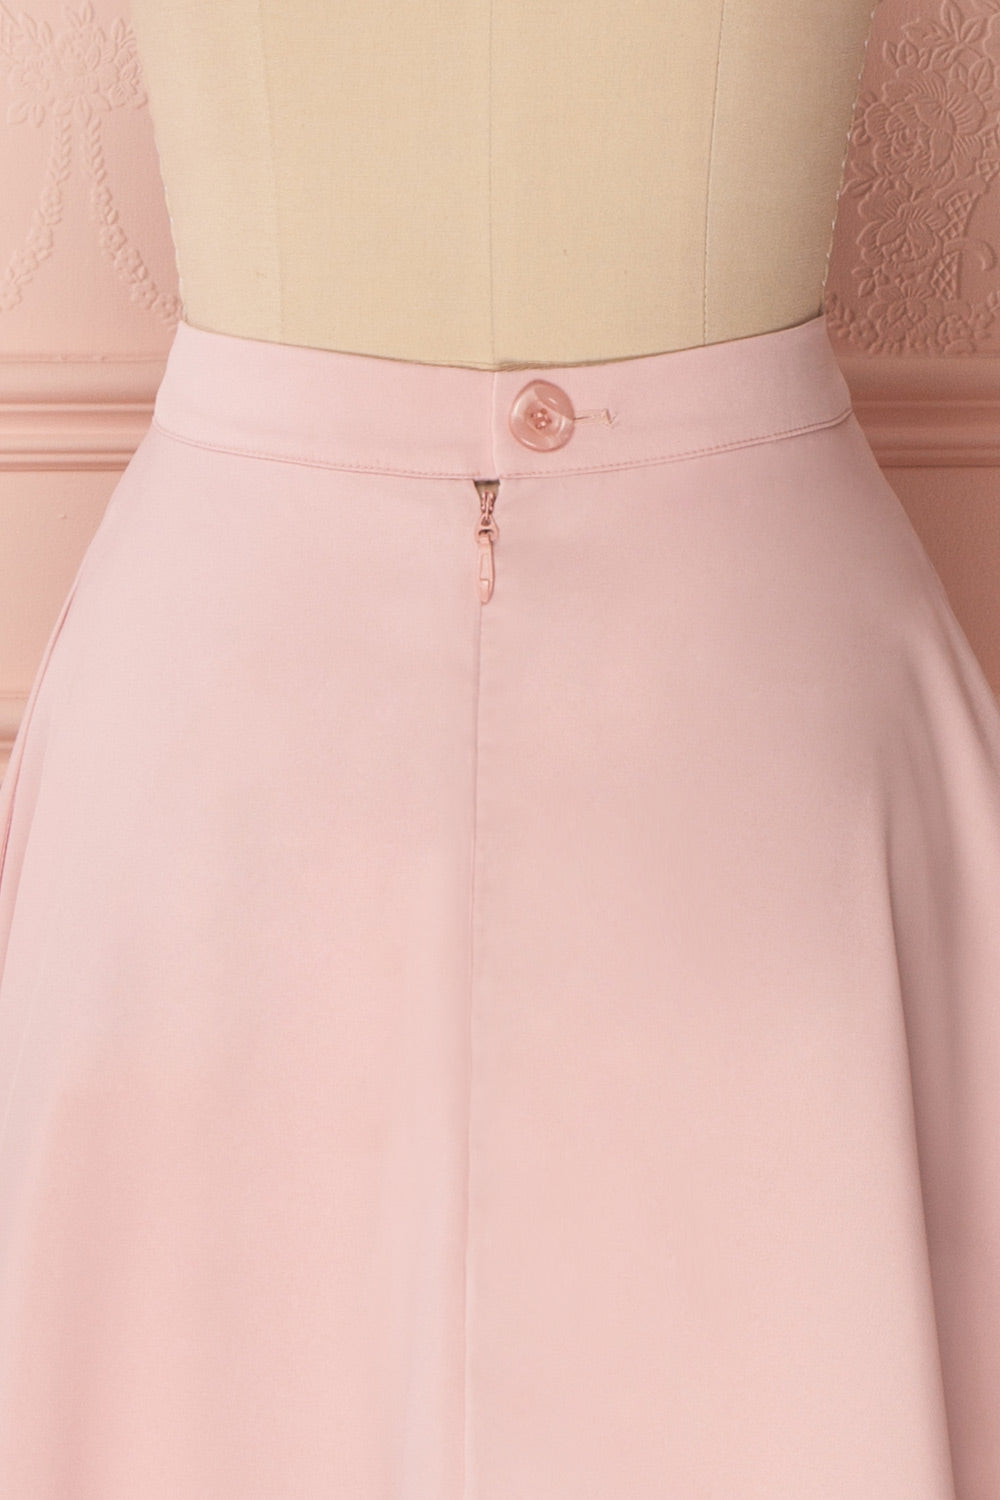 Migda Light Pink Midi Circle Skirt | Boutique 1861 6